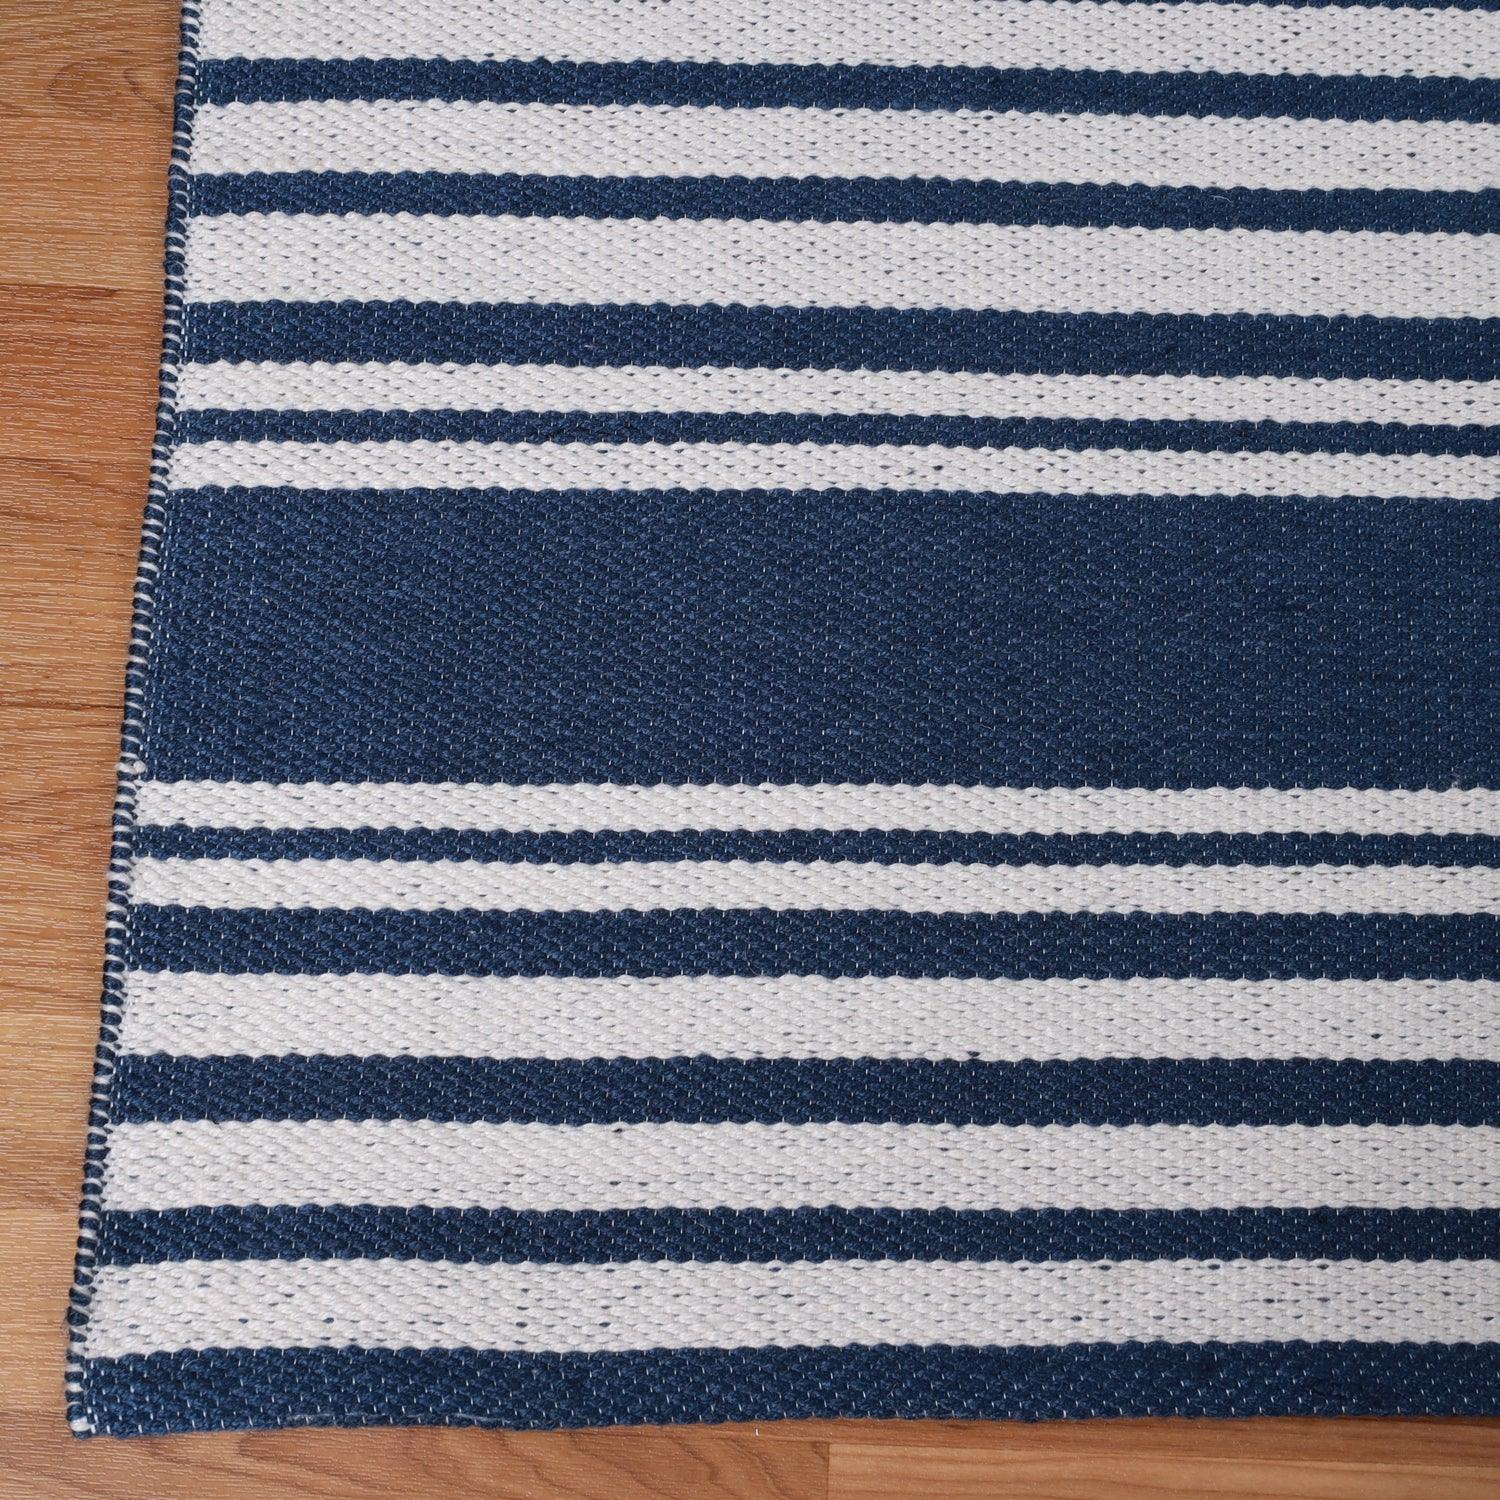  Superior Modern Stripes Large Indoor Outdoor Pattern Area Rug -  Navy Blue